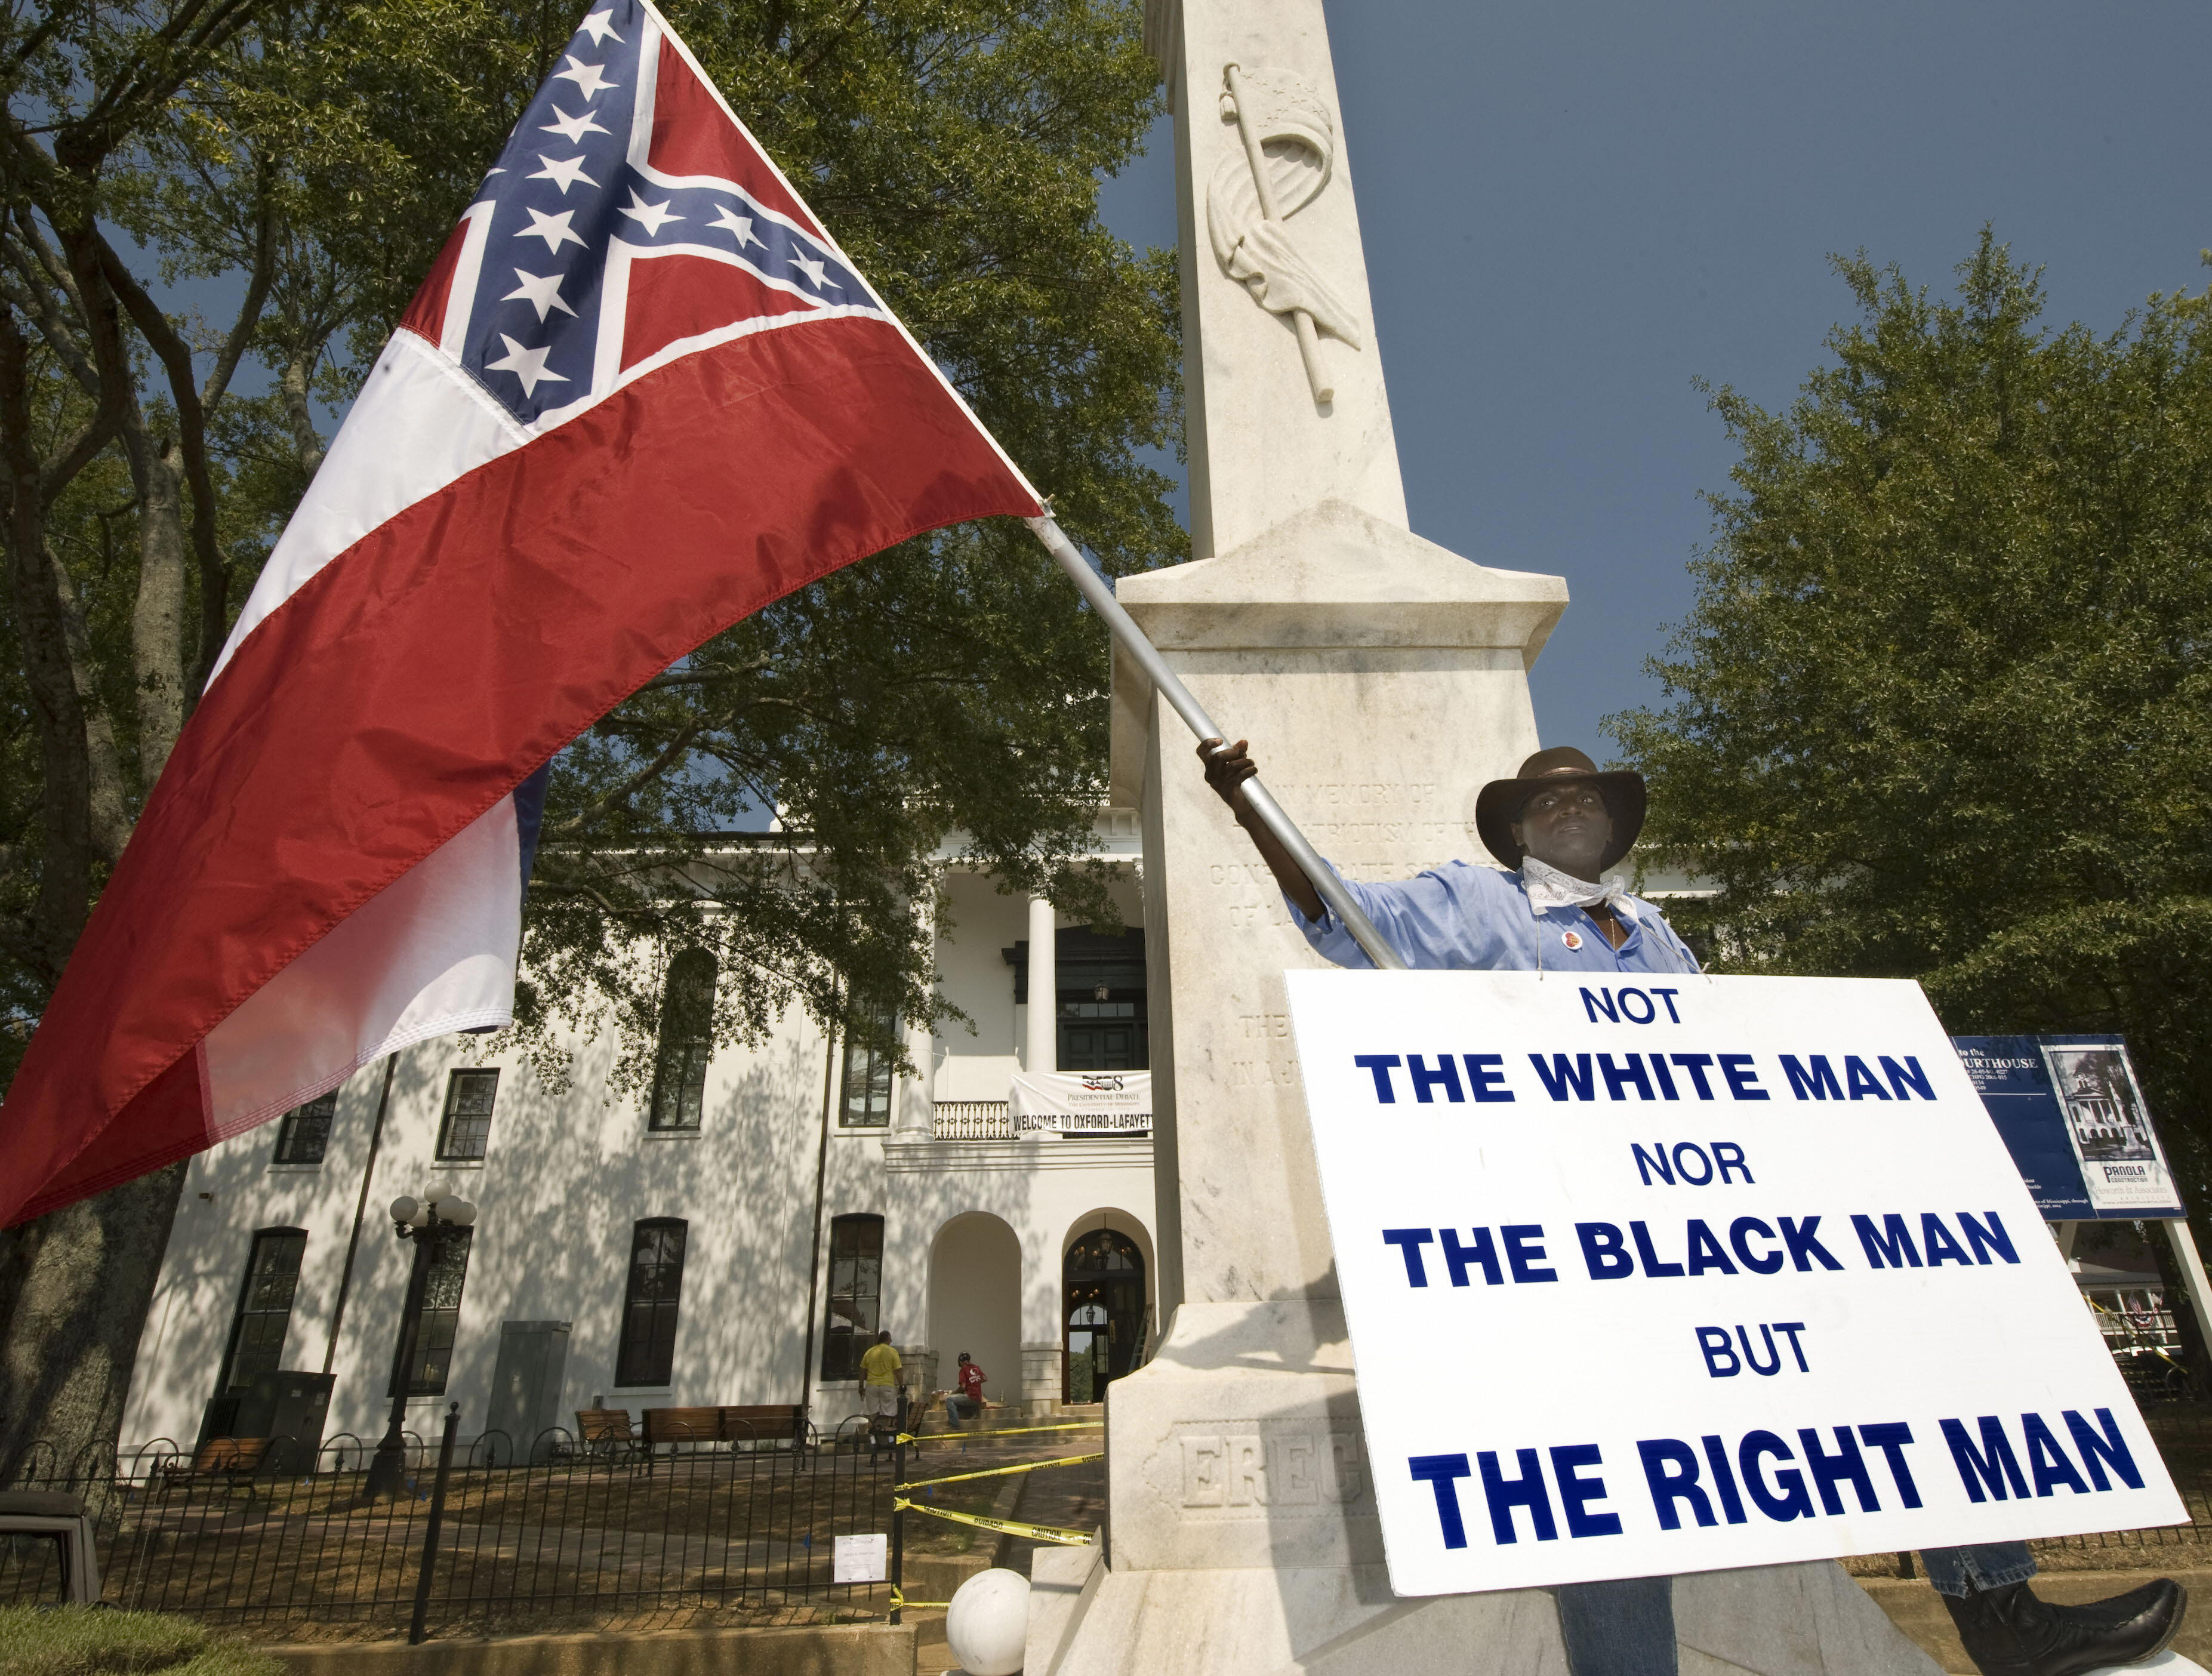 Miss Legislator Seeks To Remove Confederate Emblem From State Flag